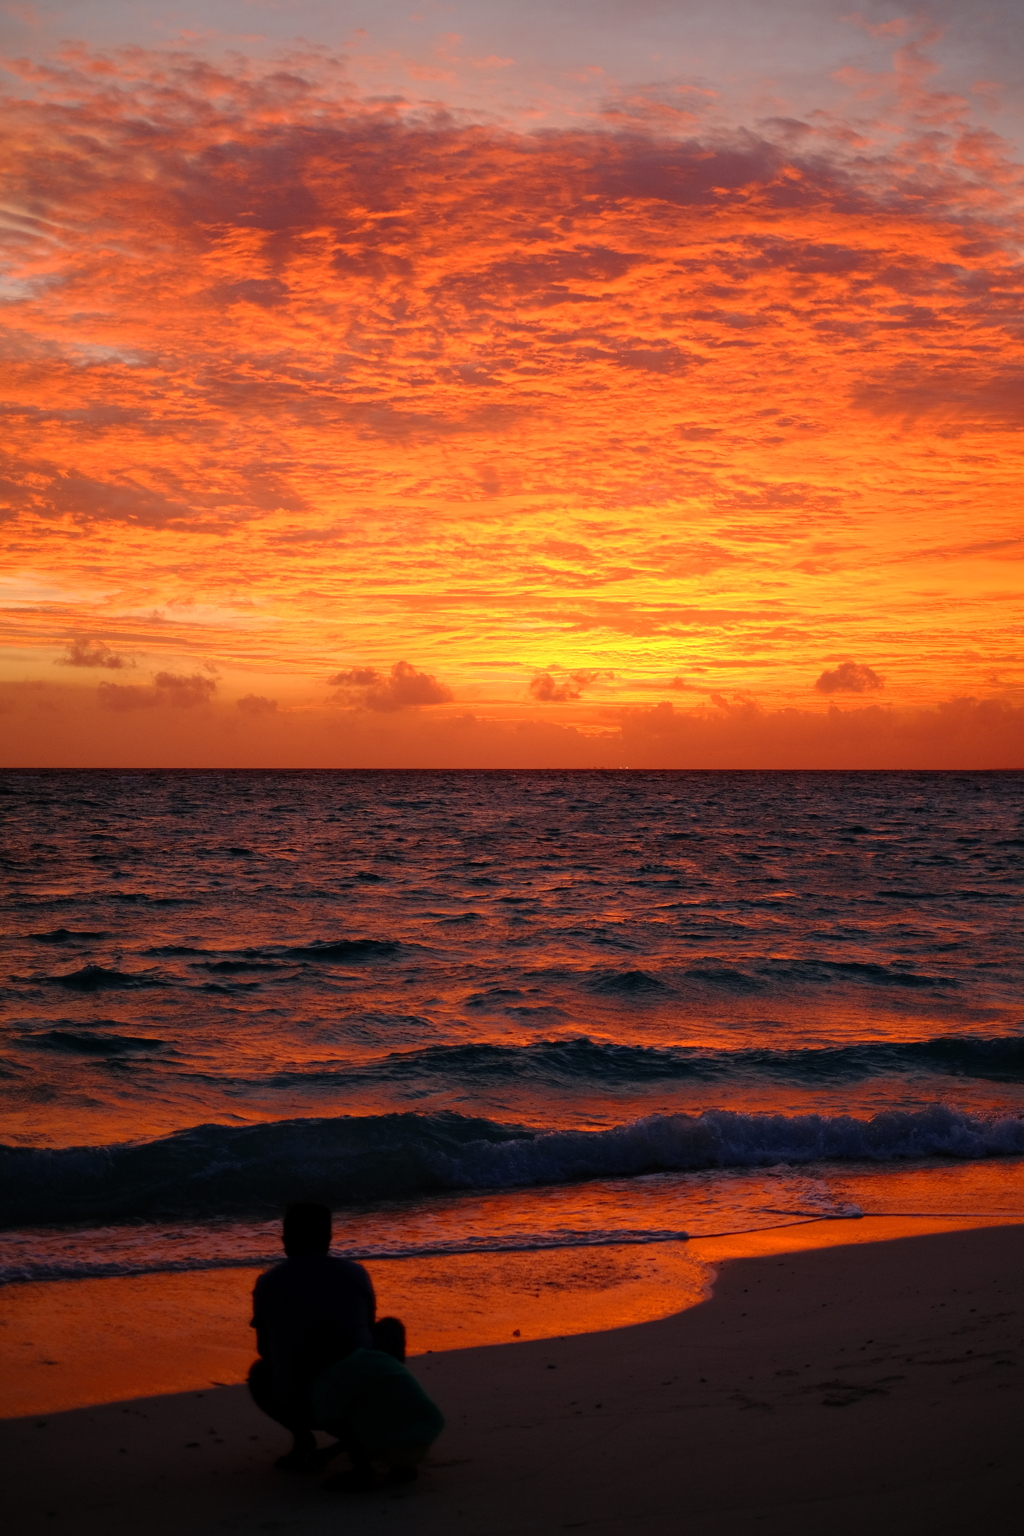 Burning Sun set - Maldives